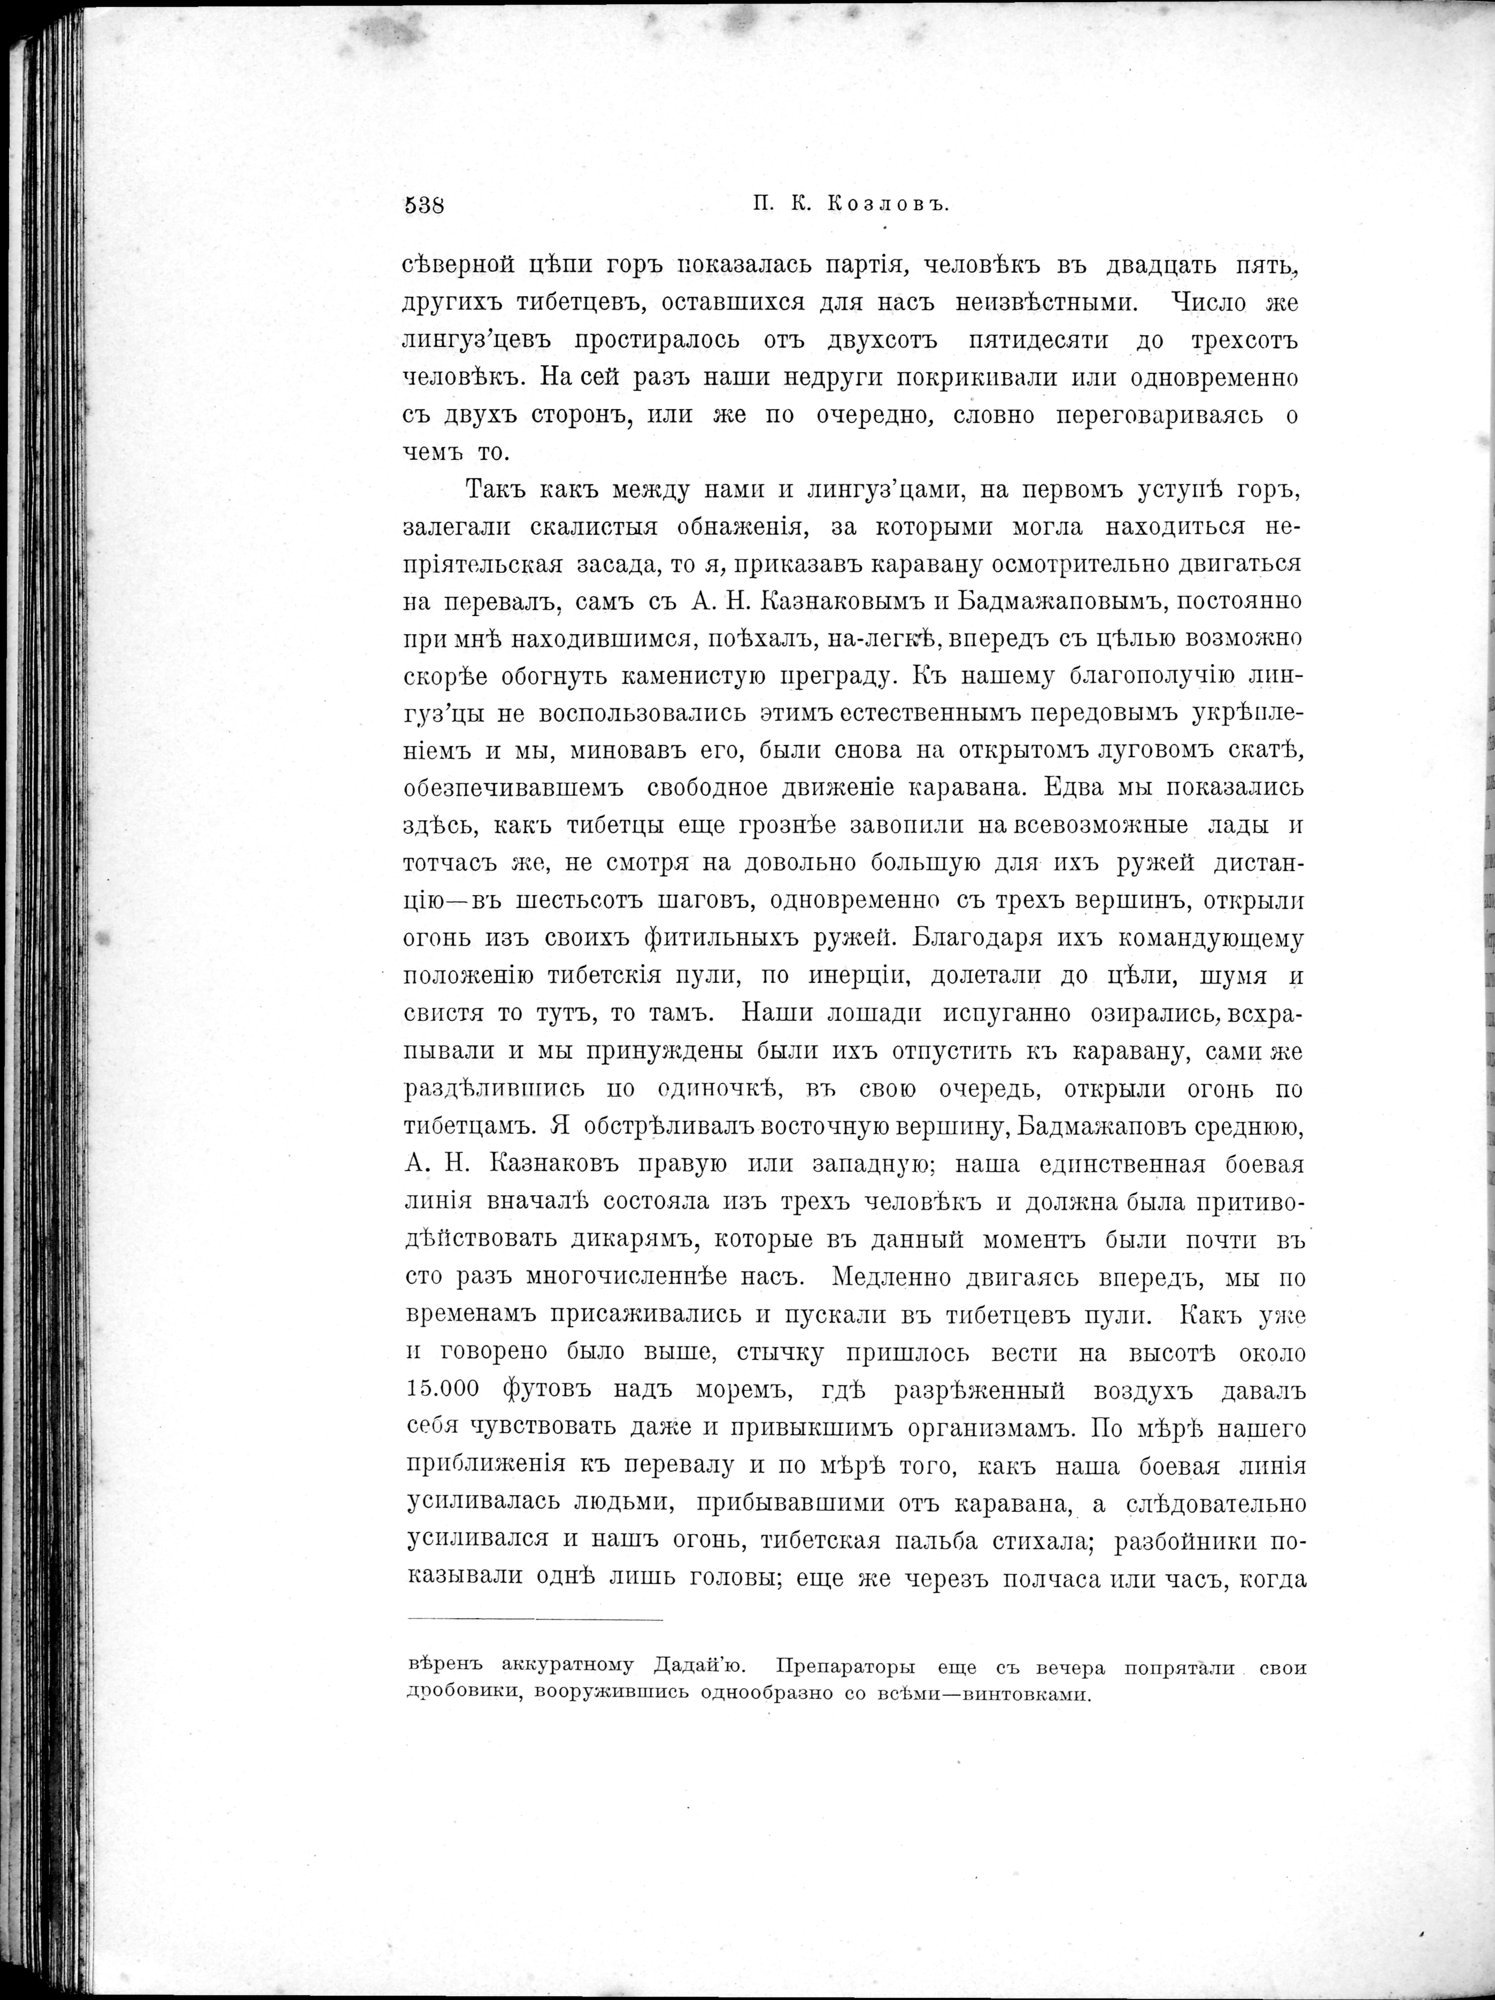 Mongoliia i Kam : vol.2 / Page 360 (Grayscale High Resolution Image)